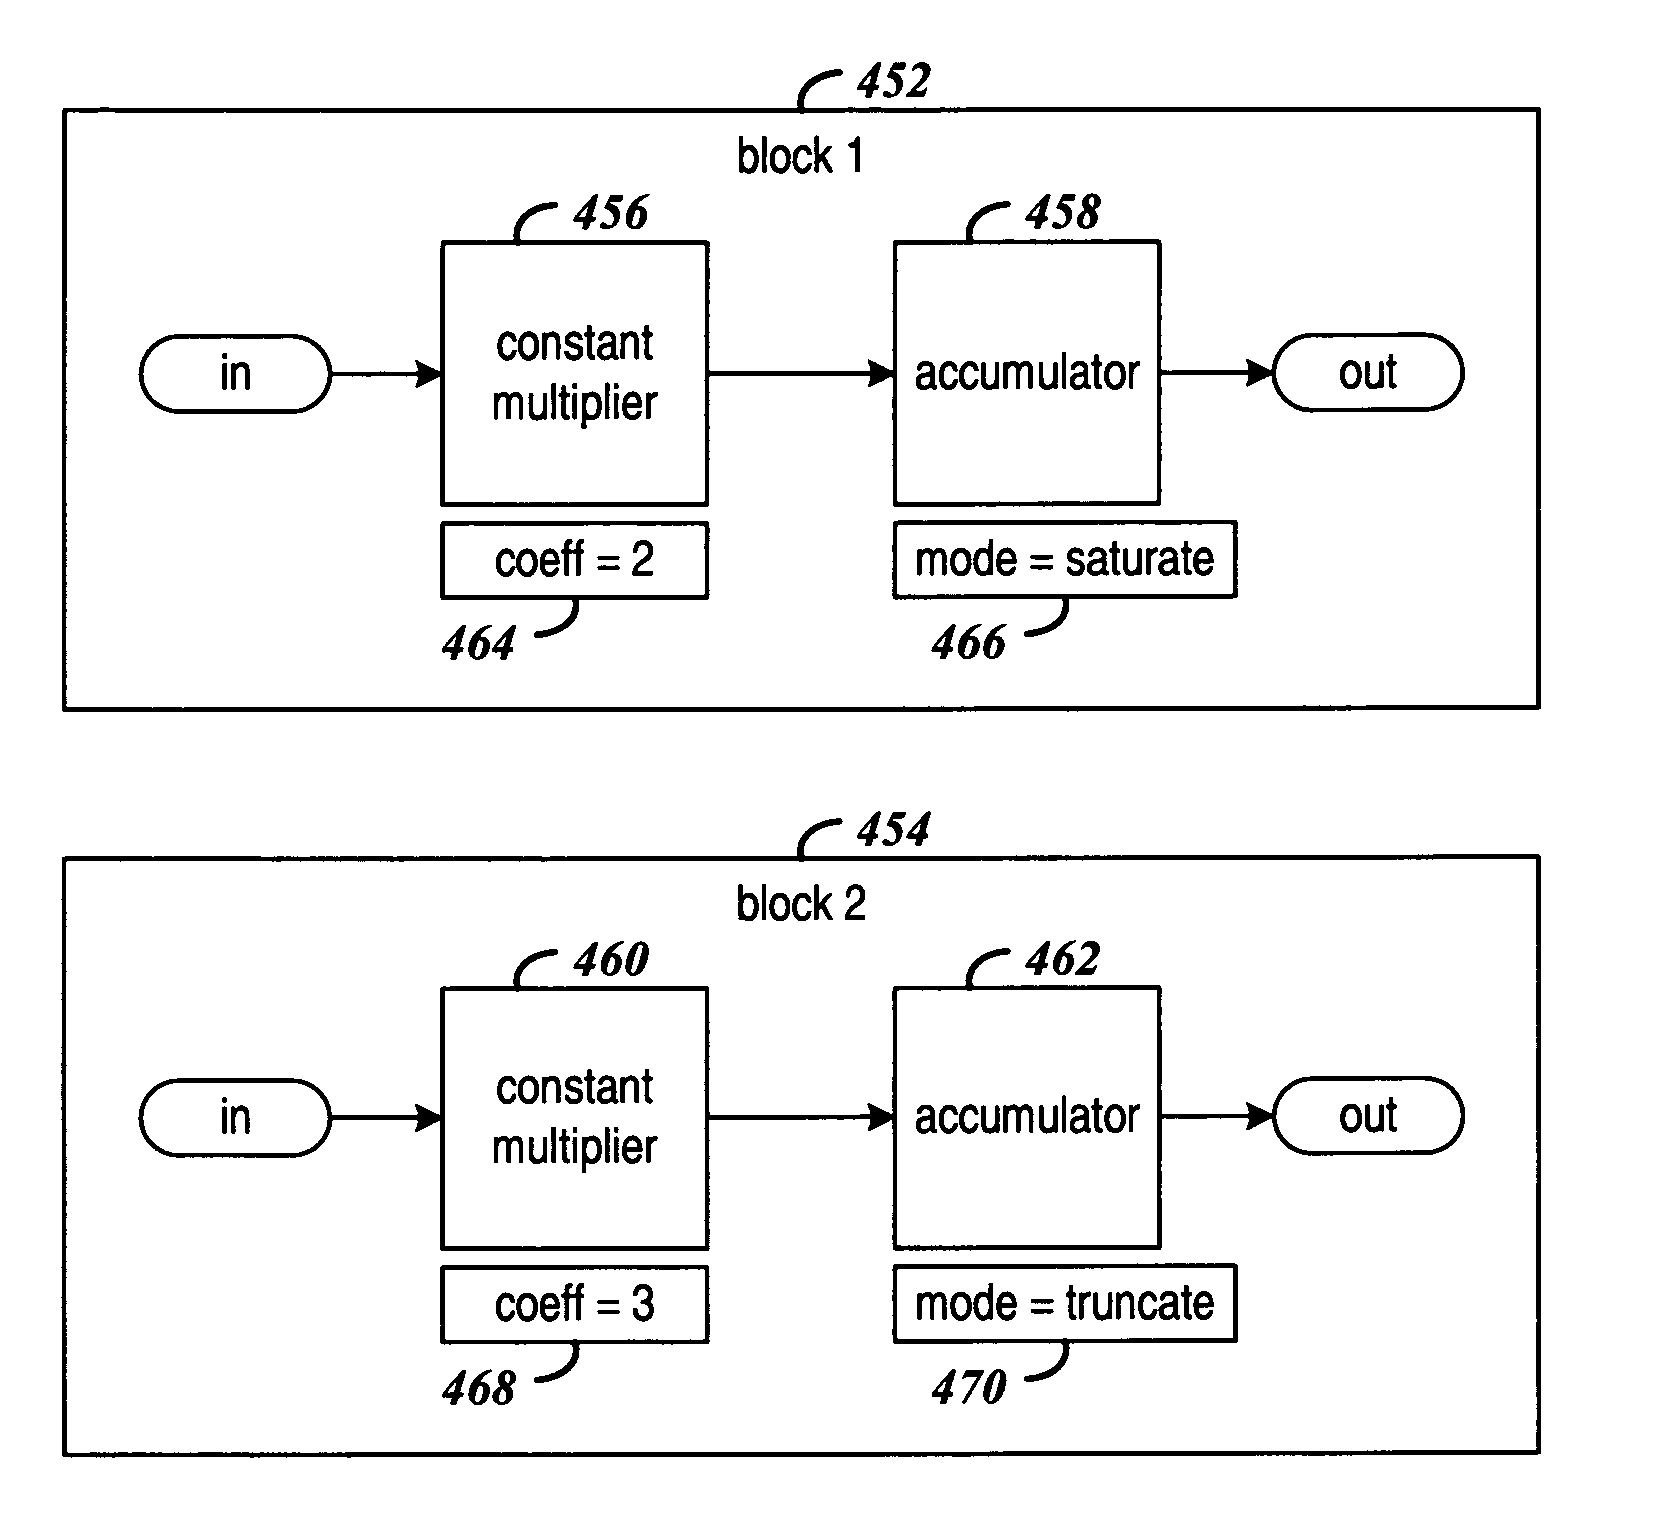 Translation of high-level circuit design blocks into hardware description language